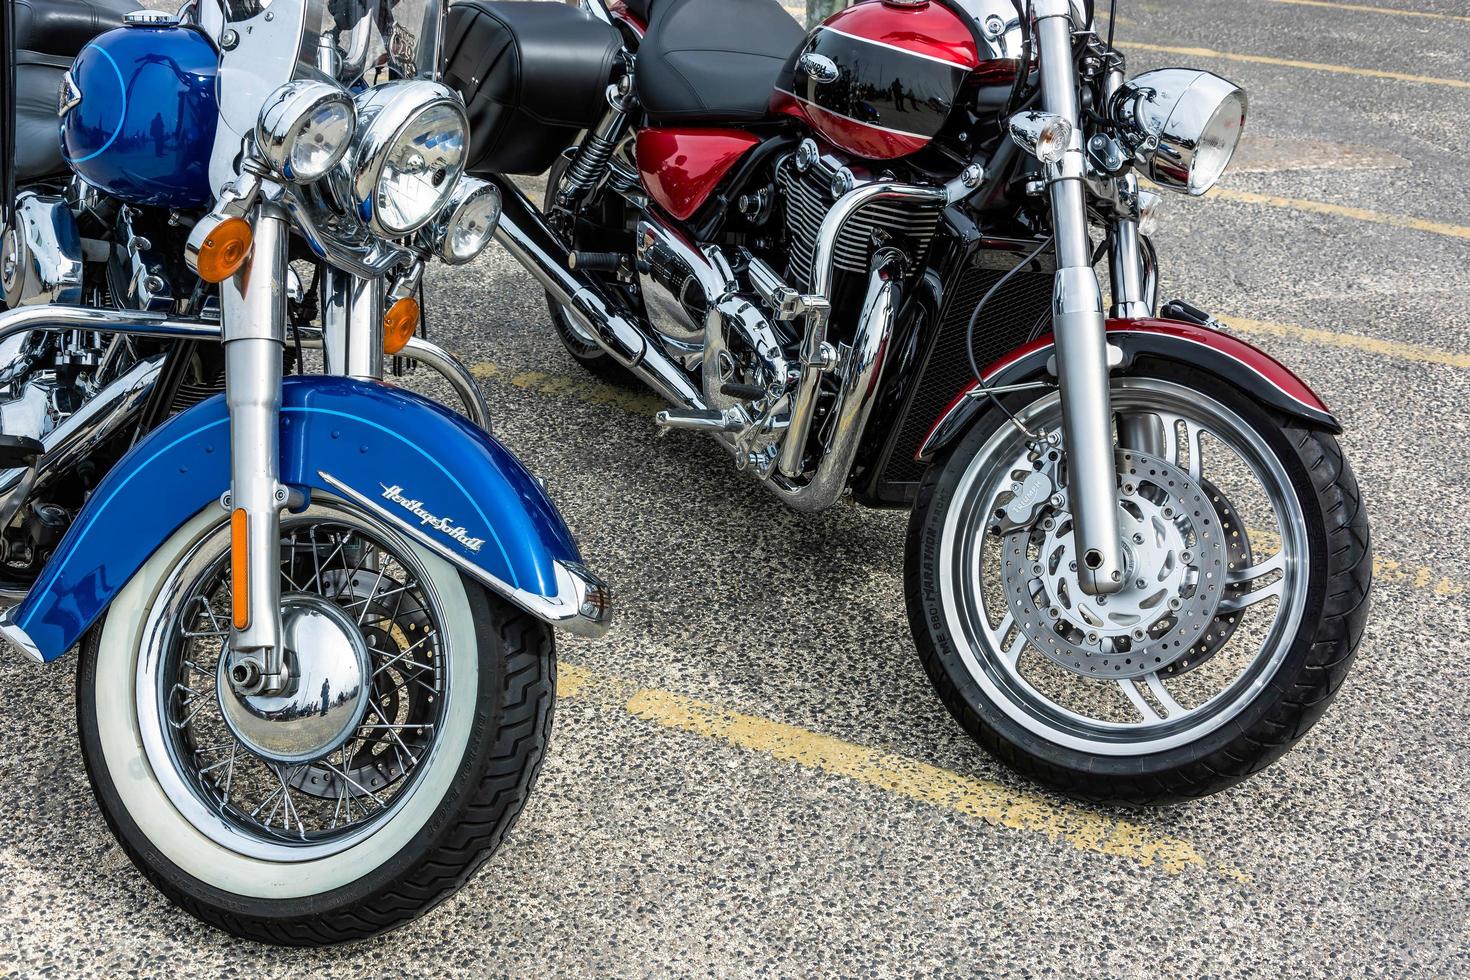 whitstable, kent, reino unido, 2013. close-up de duas motocicletas estacionadas foto